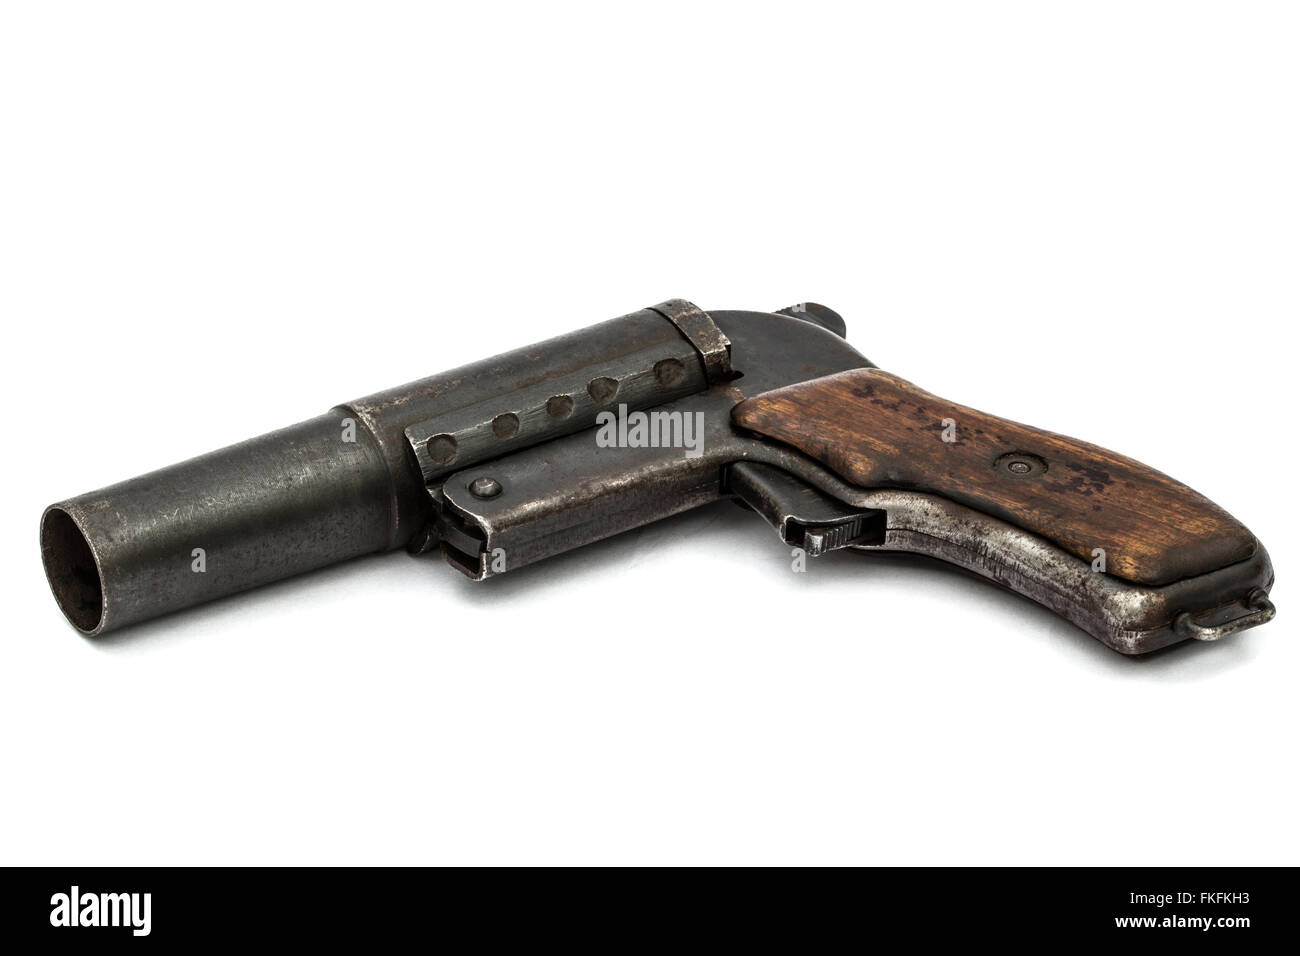 Old signal pistol, flare gun, isolated on white background Stock Photo